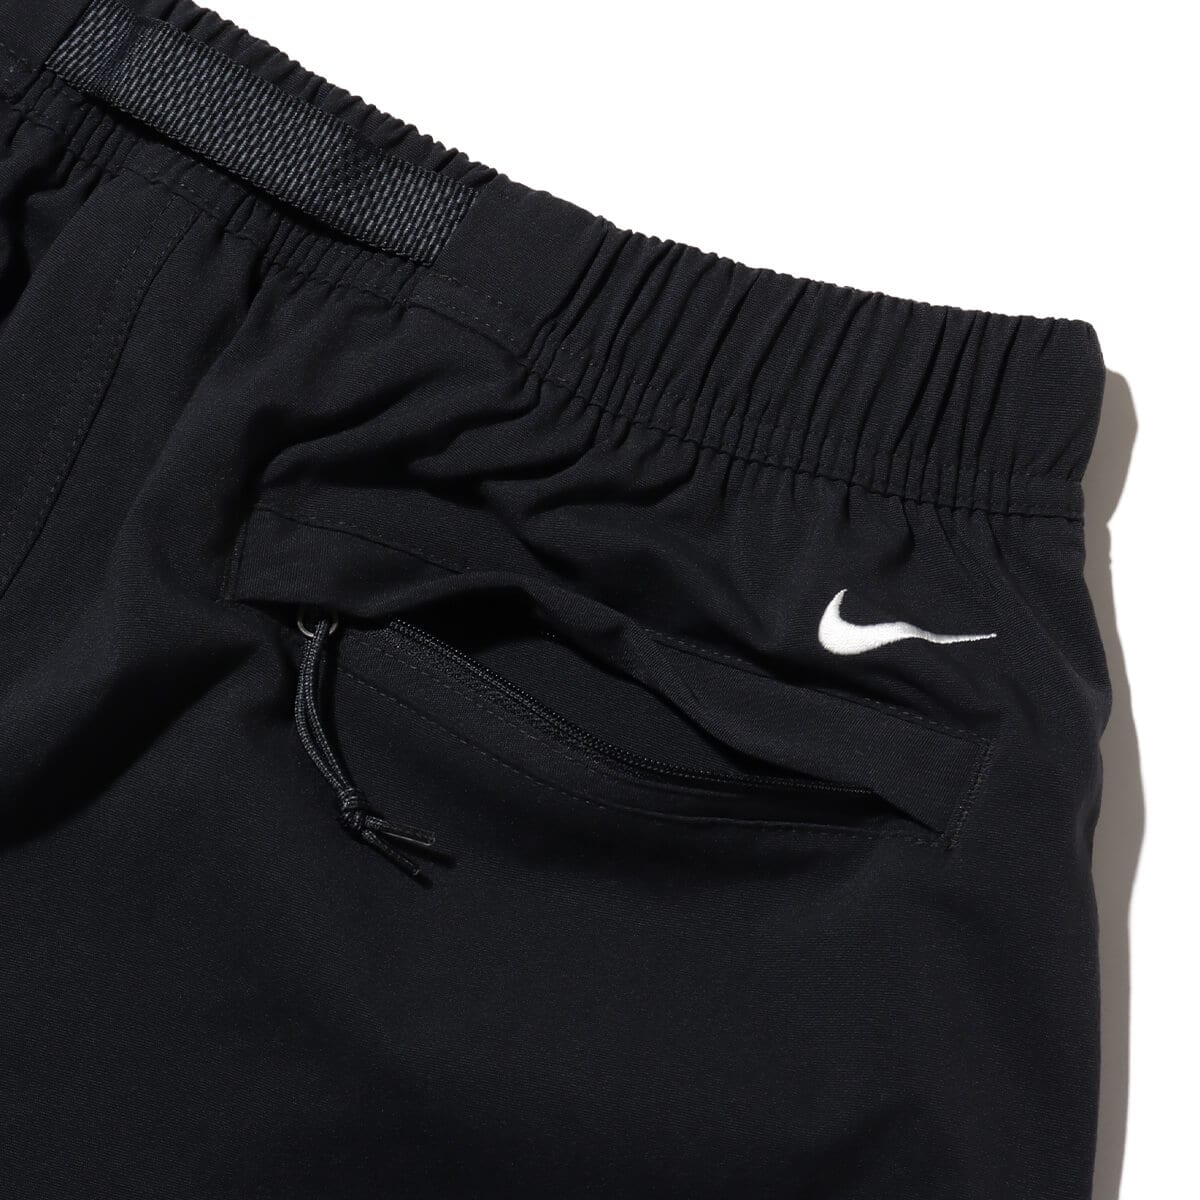 Nike AS M ACG Hike Short BLACK/ANTHRACITE/SUMMIT White - ブラック - S